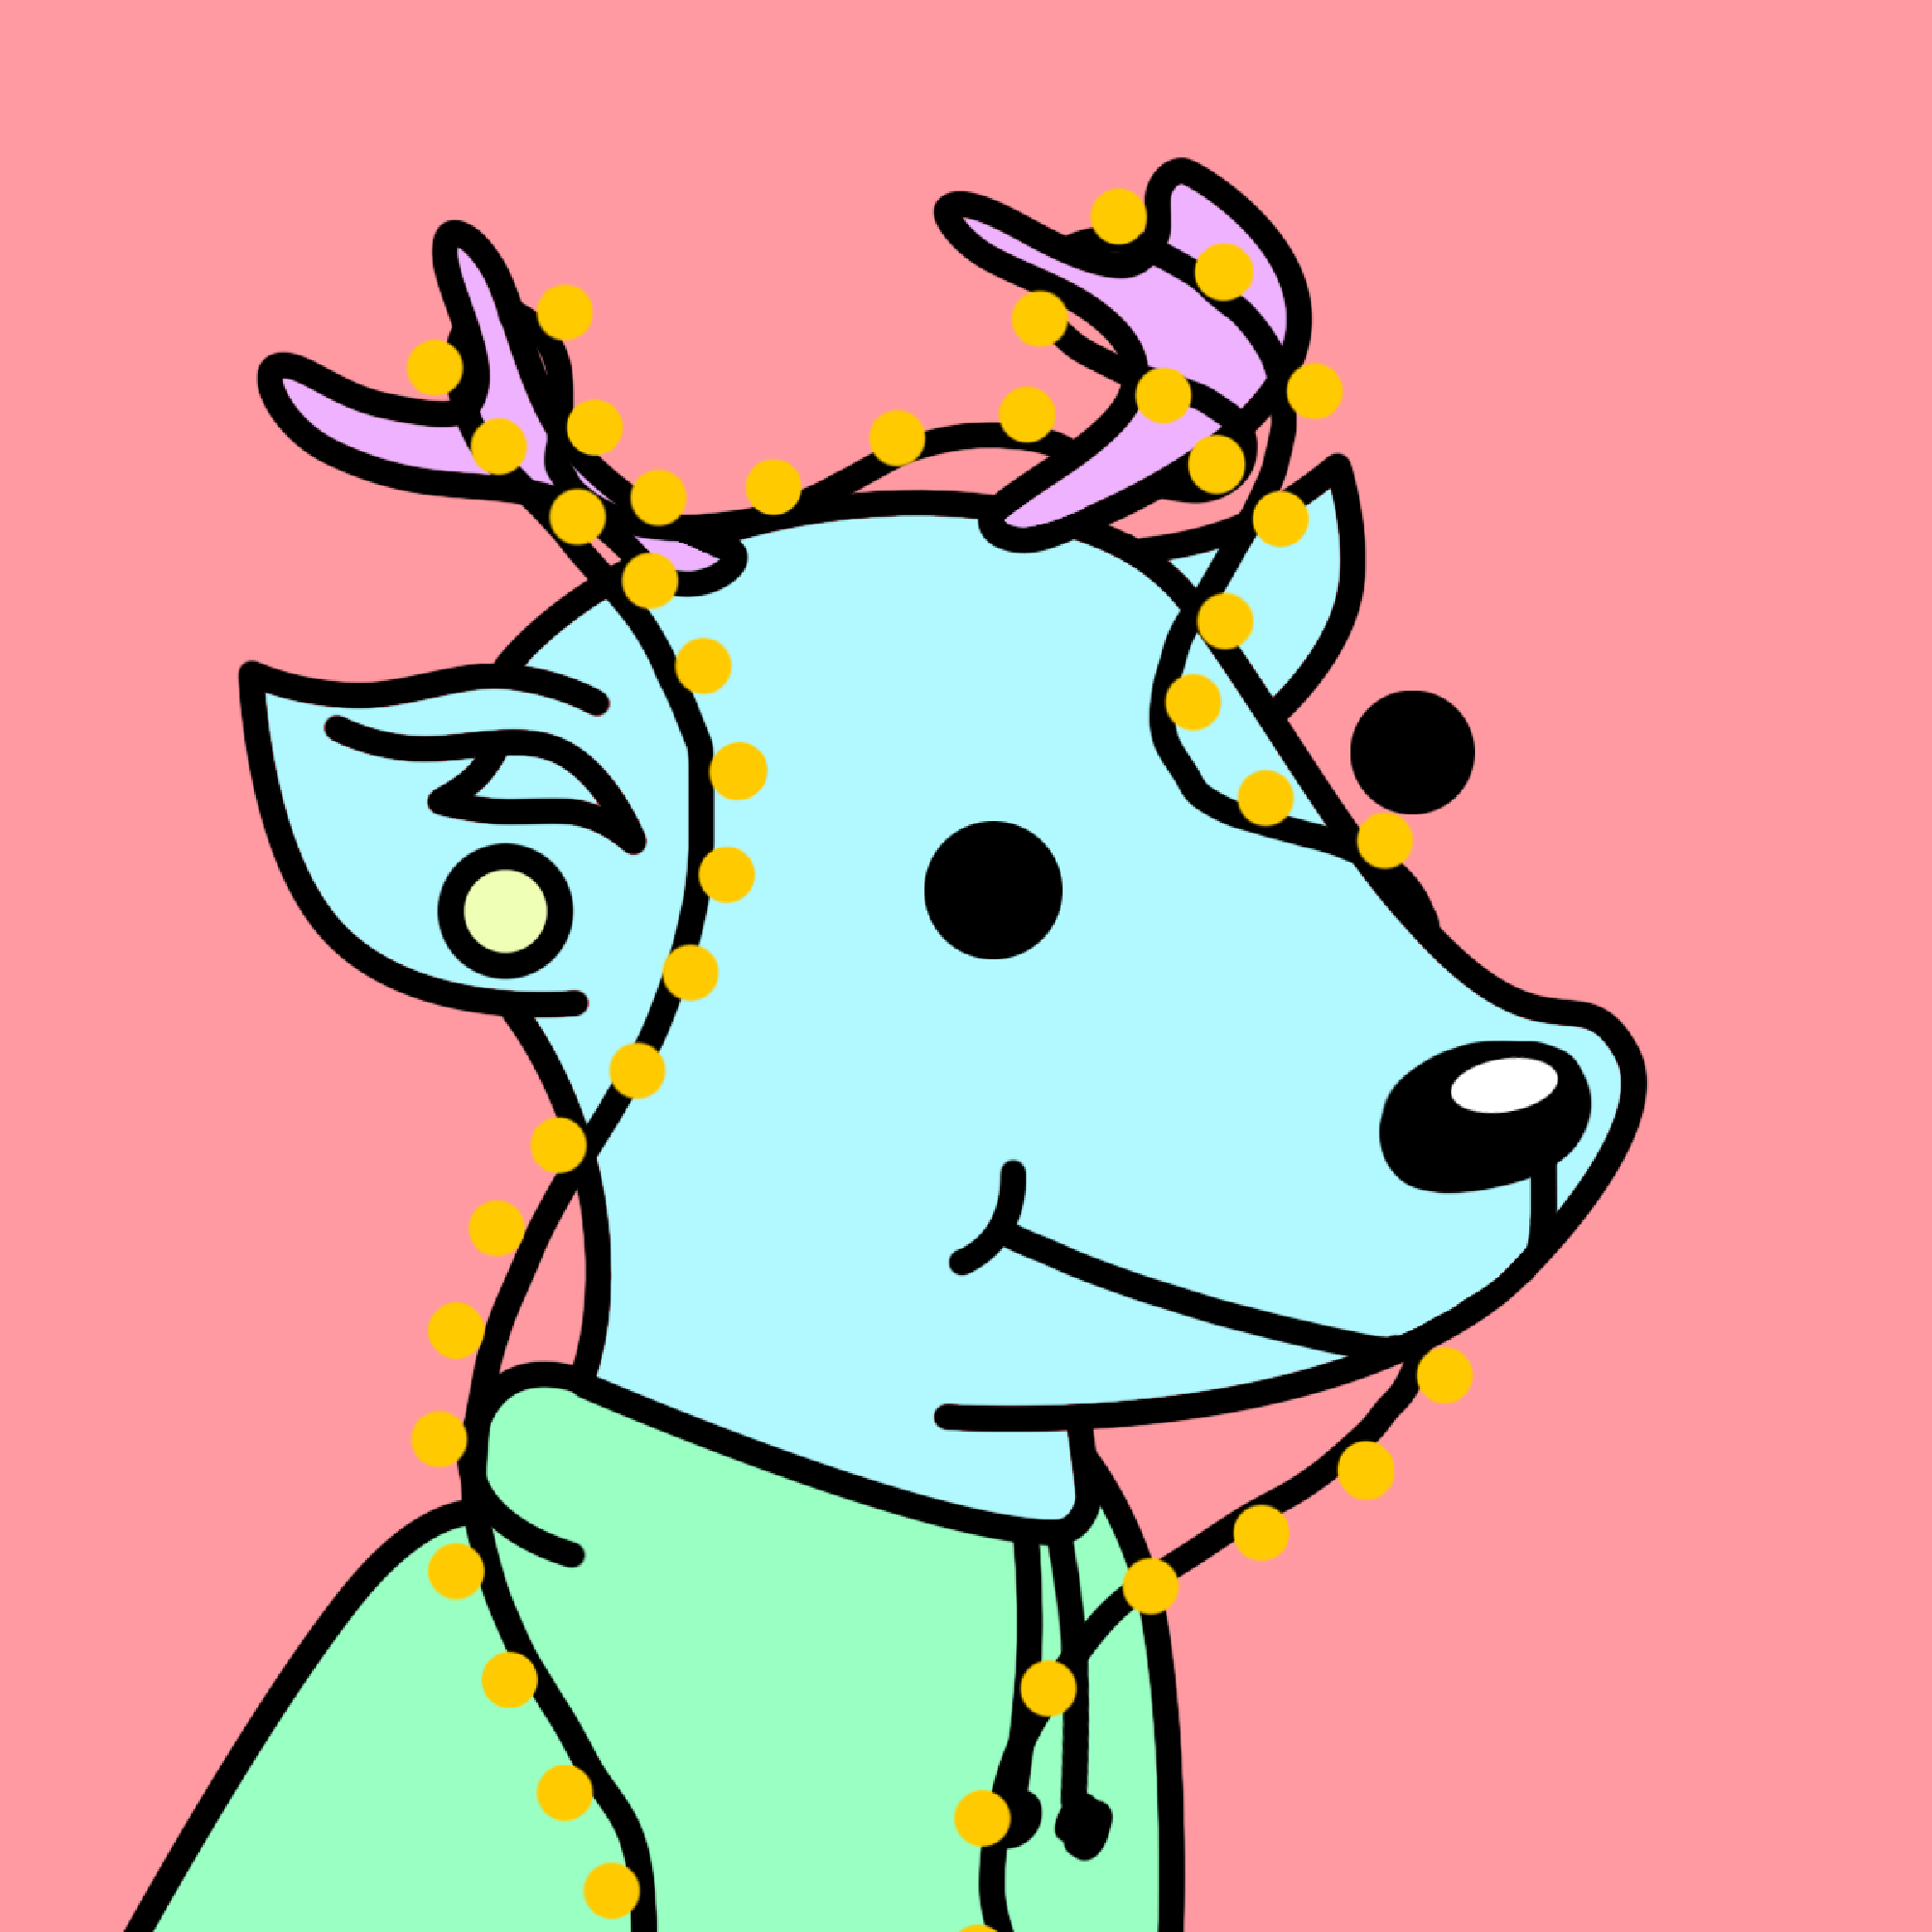 Doodled Deer#3009